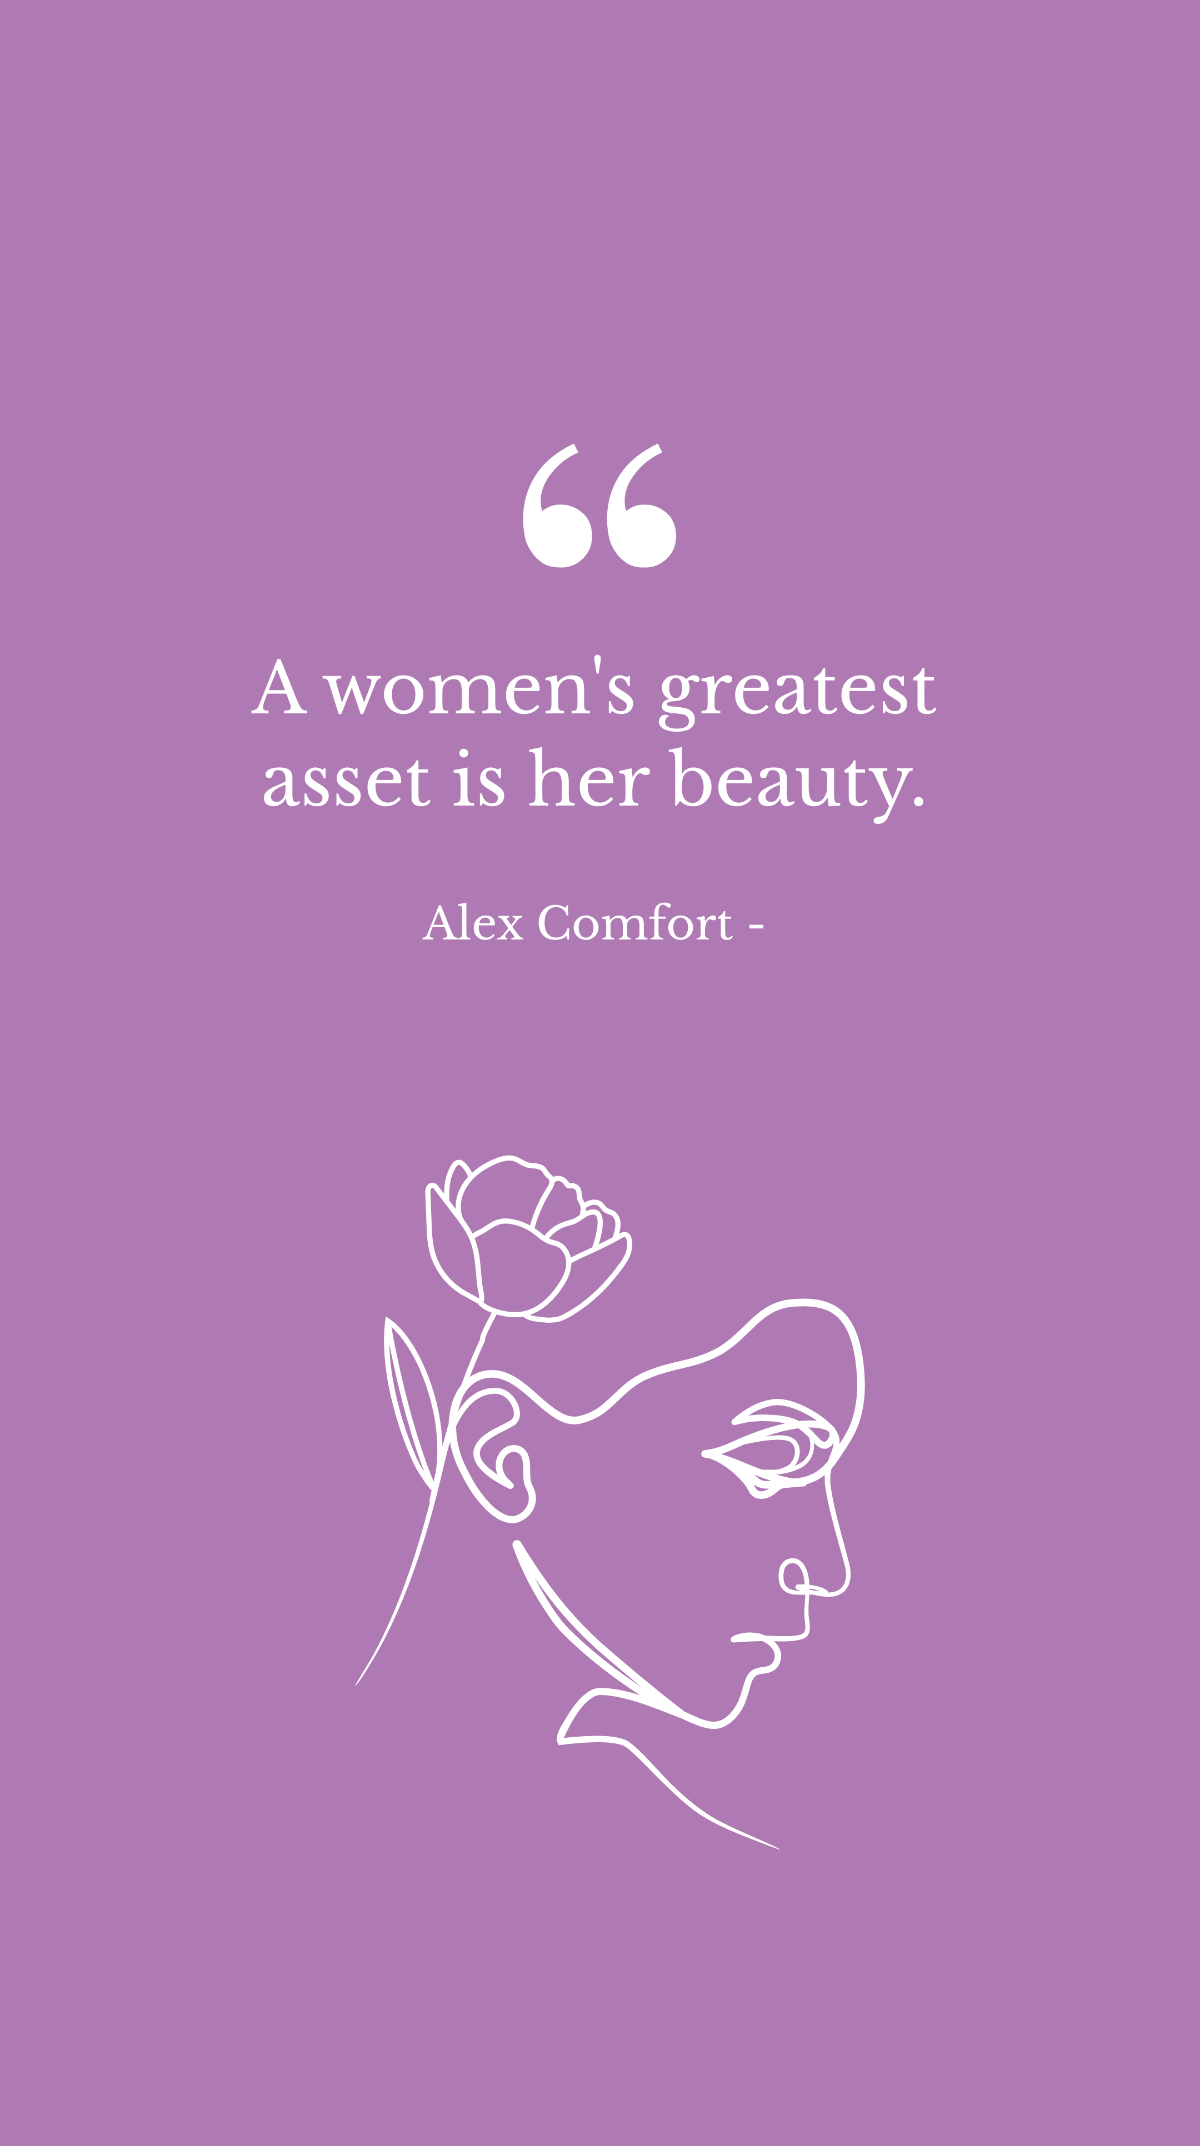 Alex Comfort - A women's greatest asset is her beauty.